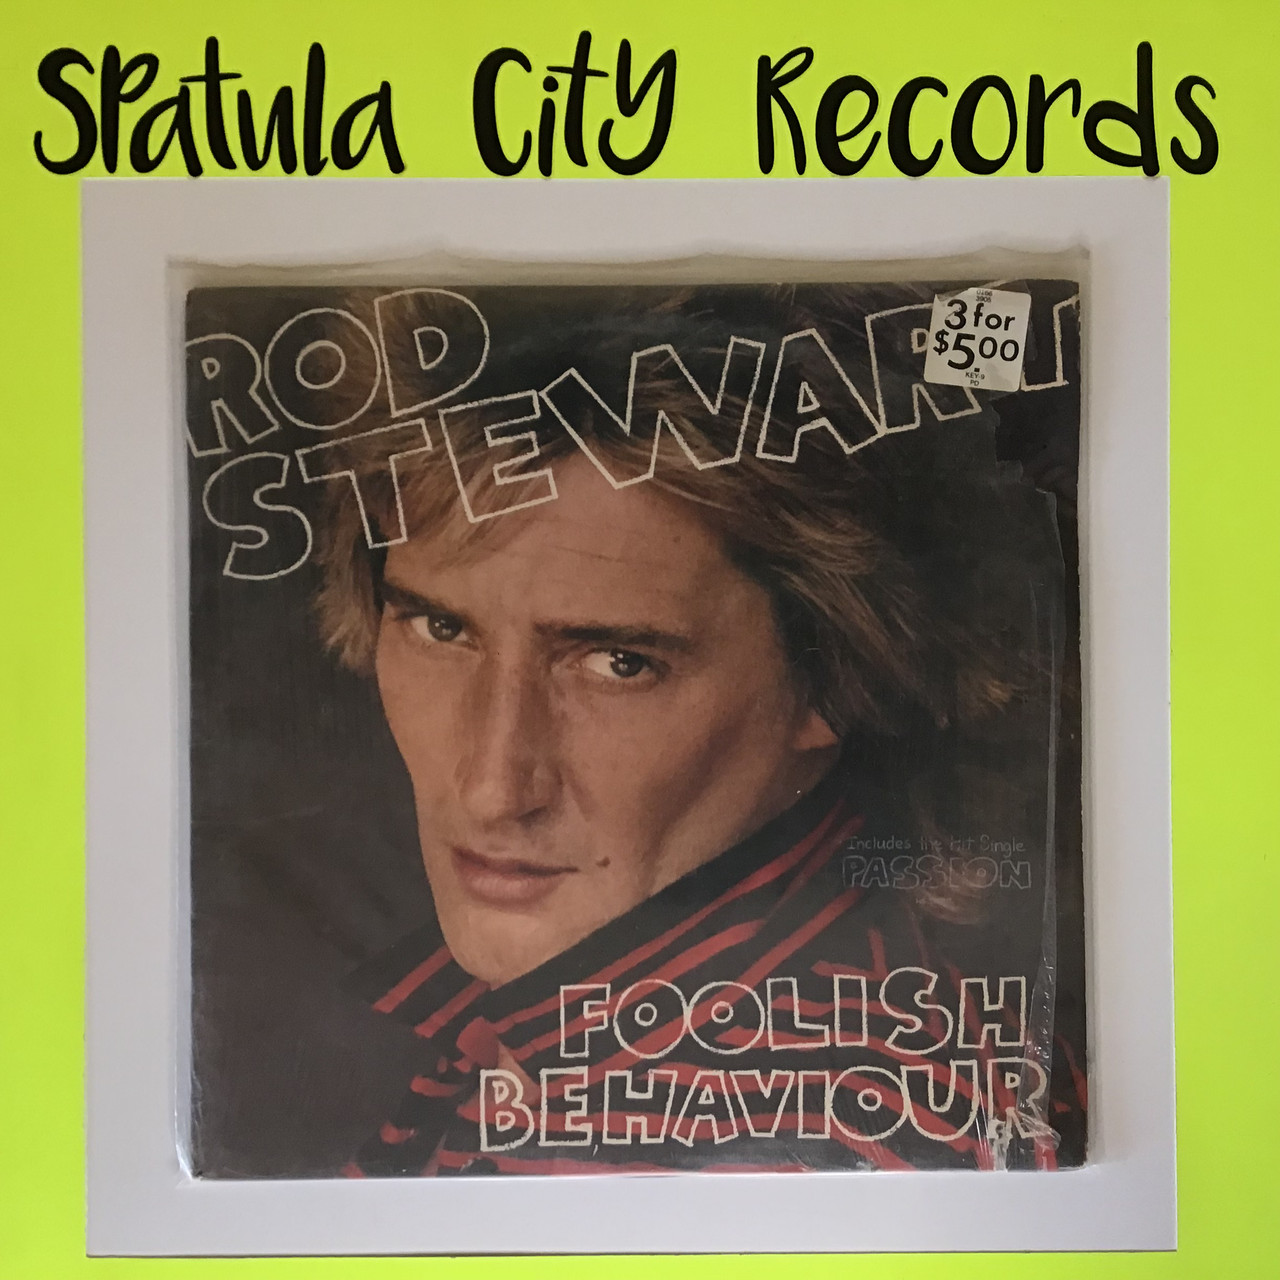 Rod Stewart - Foolish Behavior - vinyl record album LP